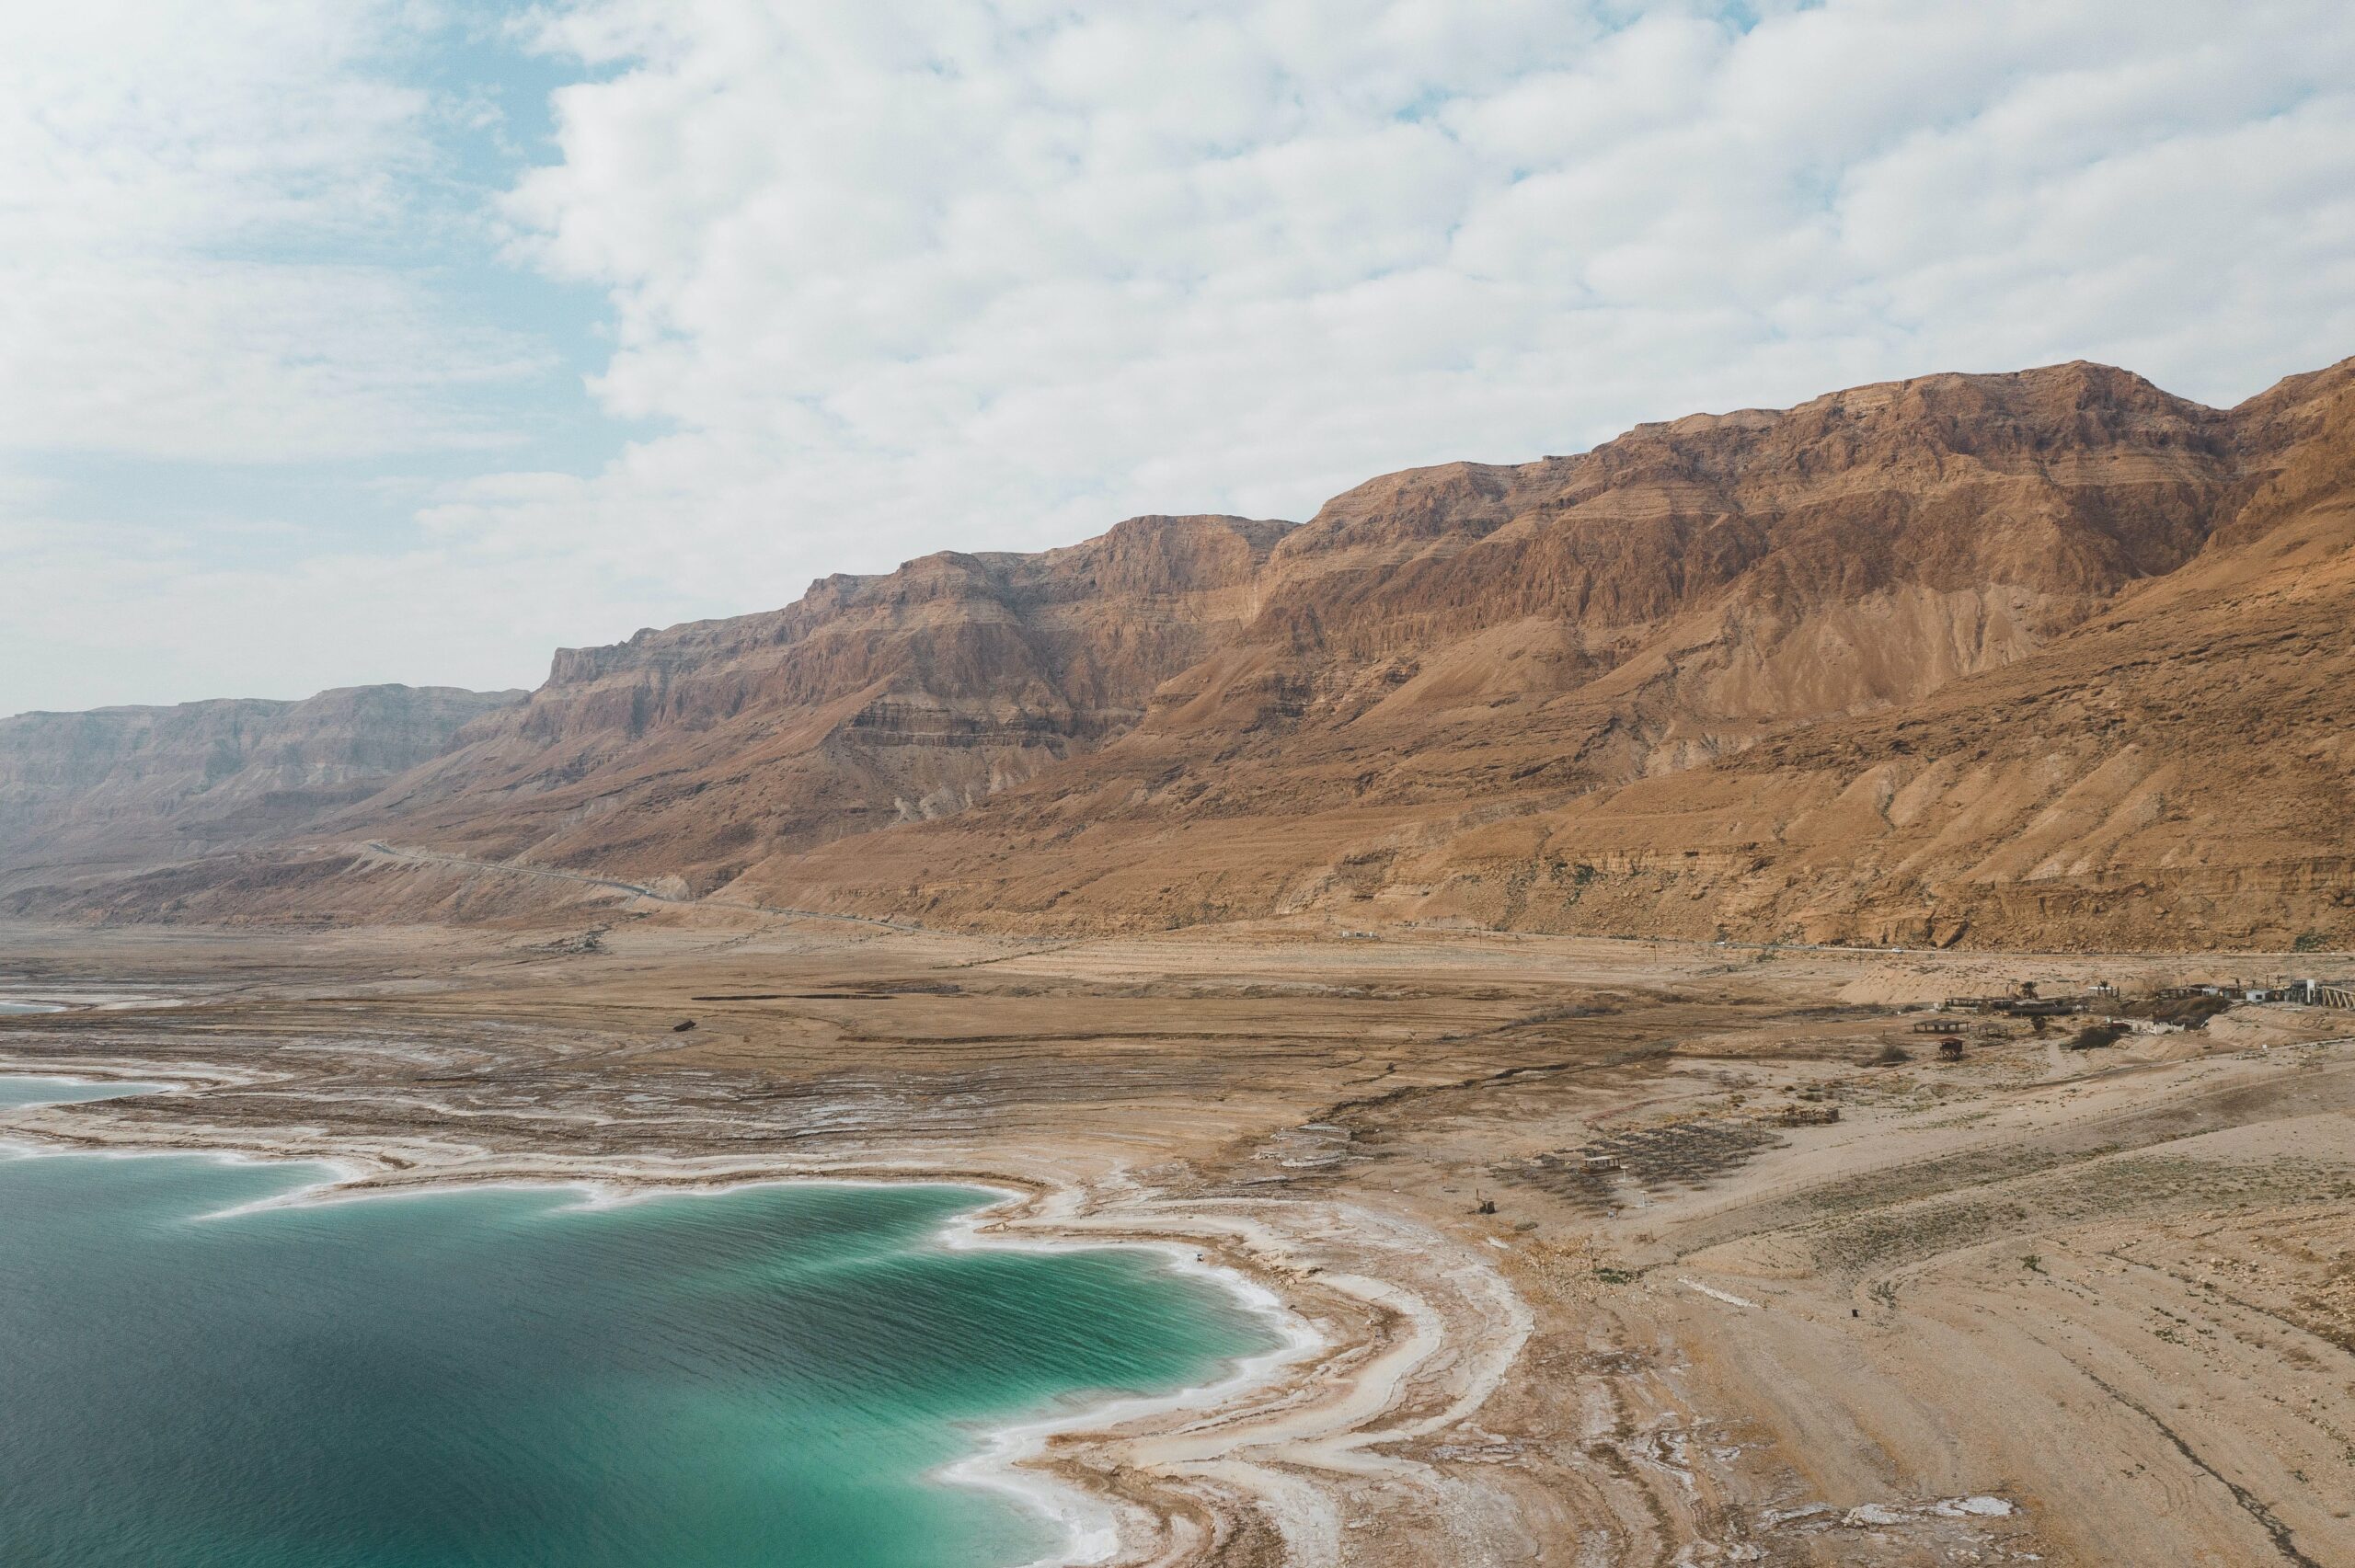 The Dead Sea, Israel